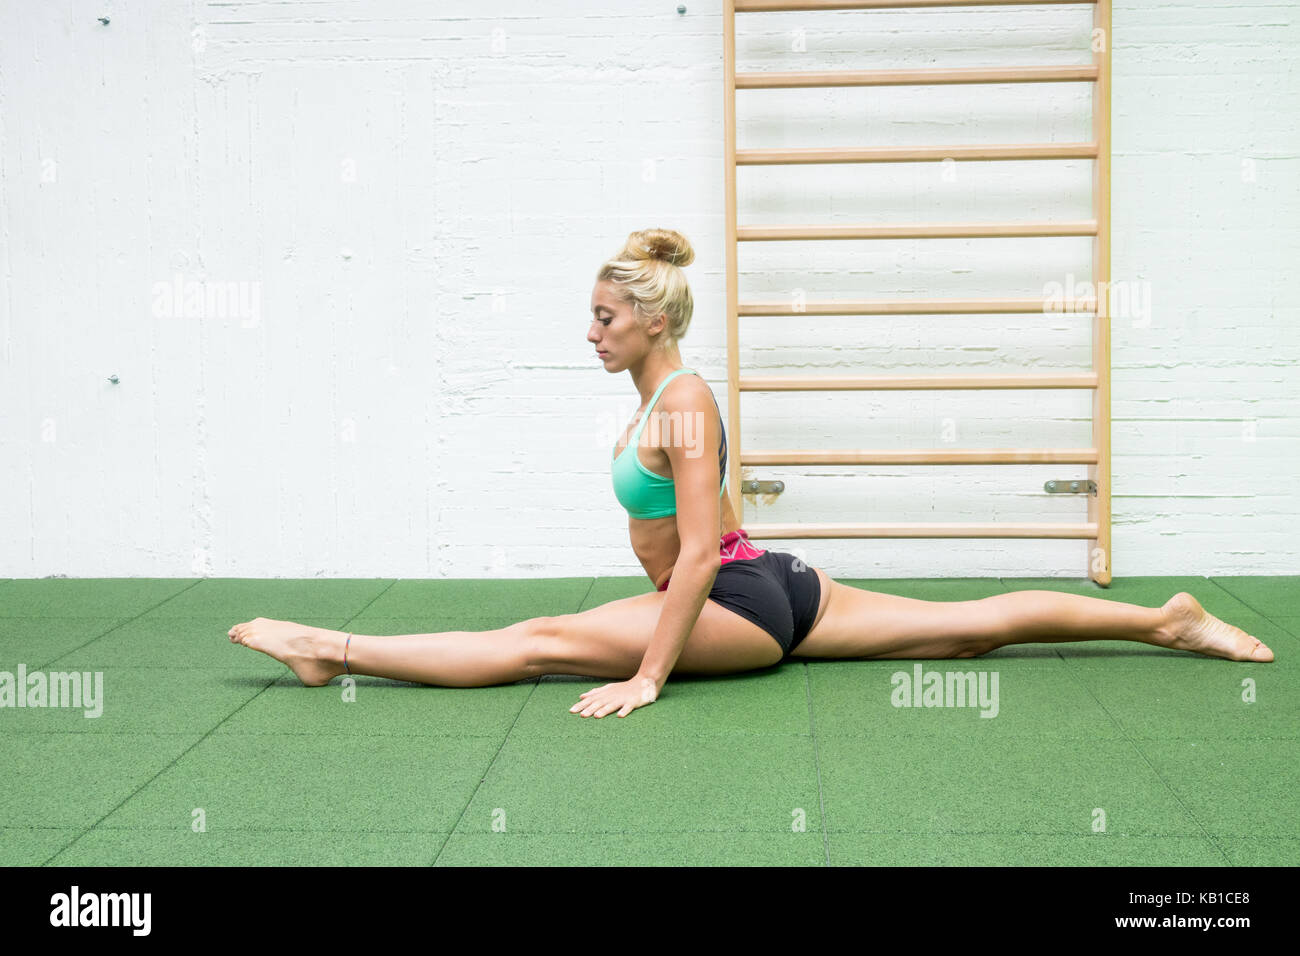 https://c8.alamy.com/comp/KB1CE8/fitness-girl-stretching-legs-doing-pilates-leg-stretches-exercises-KB1CE8.jpg